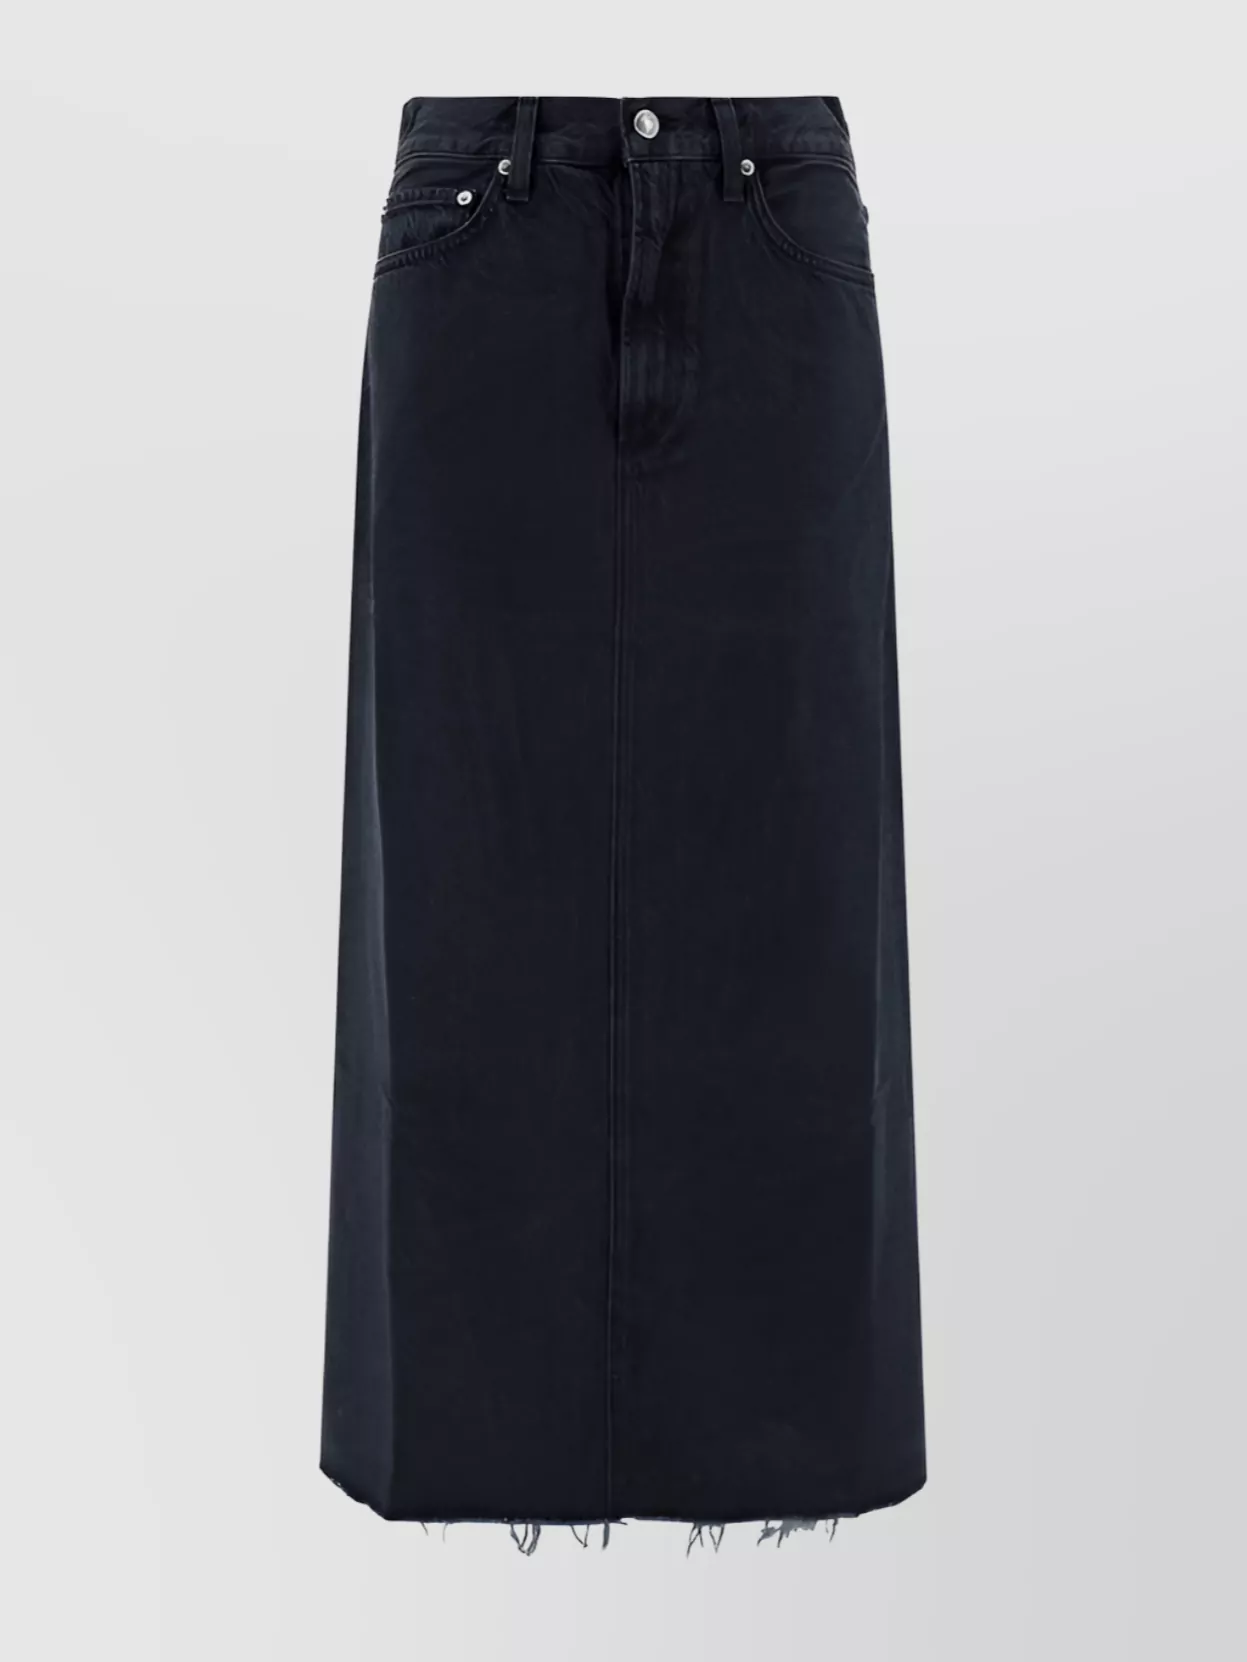 Agolde Cotton Denim Skirt Contrast Stitching In Black